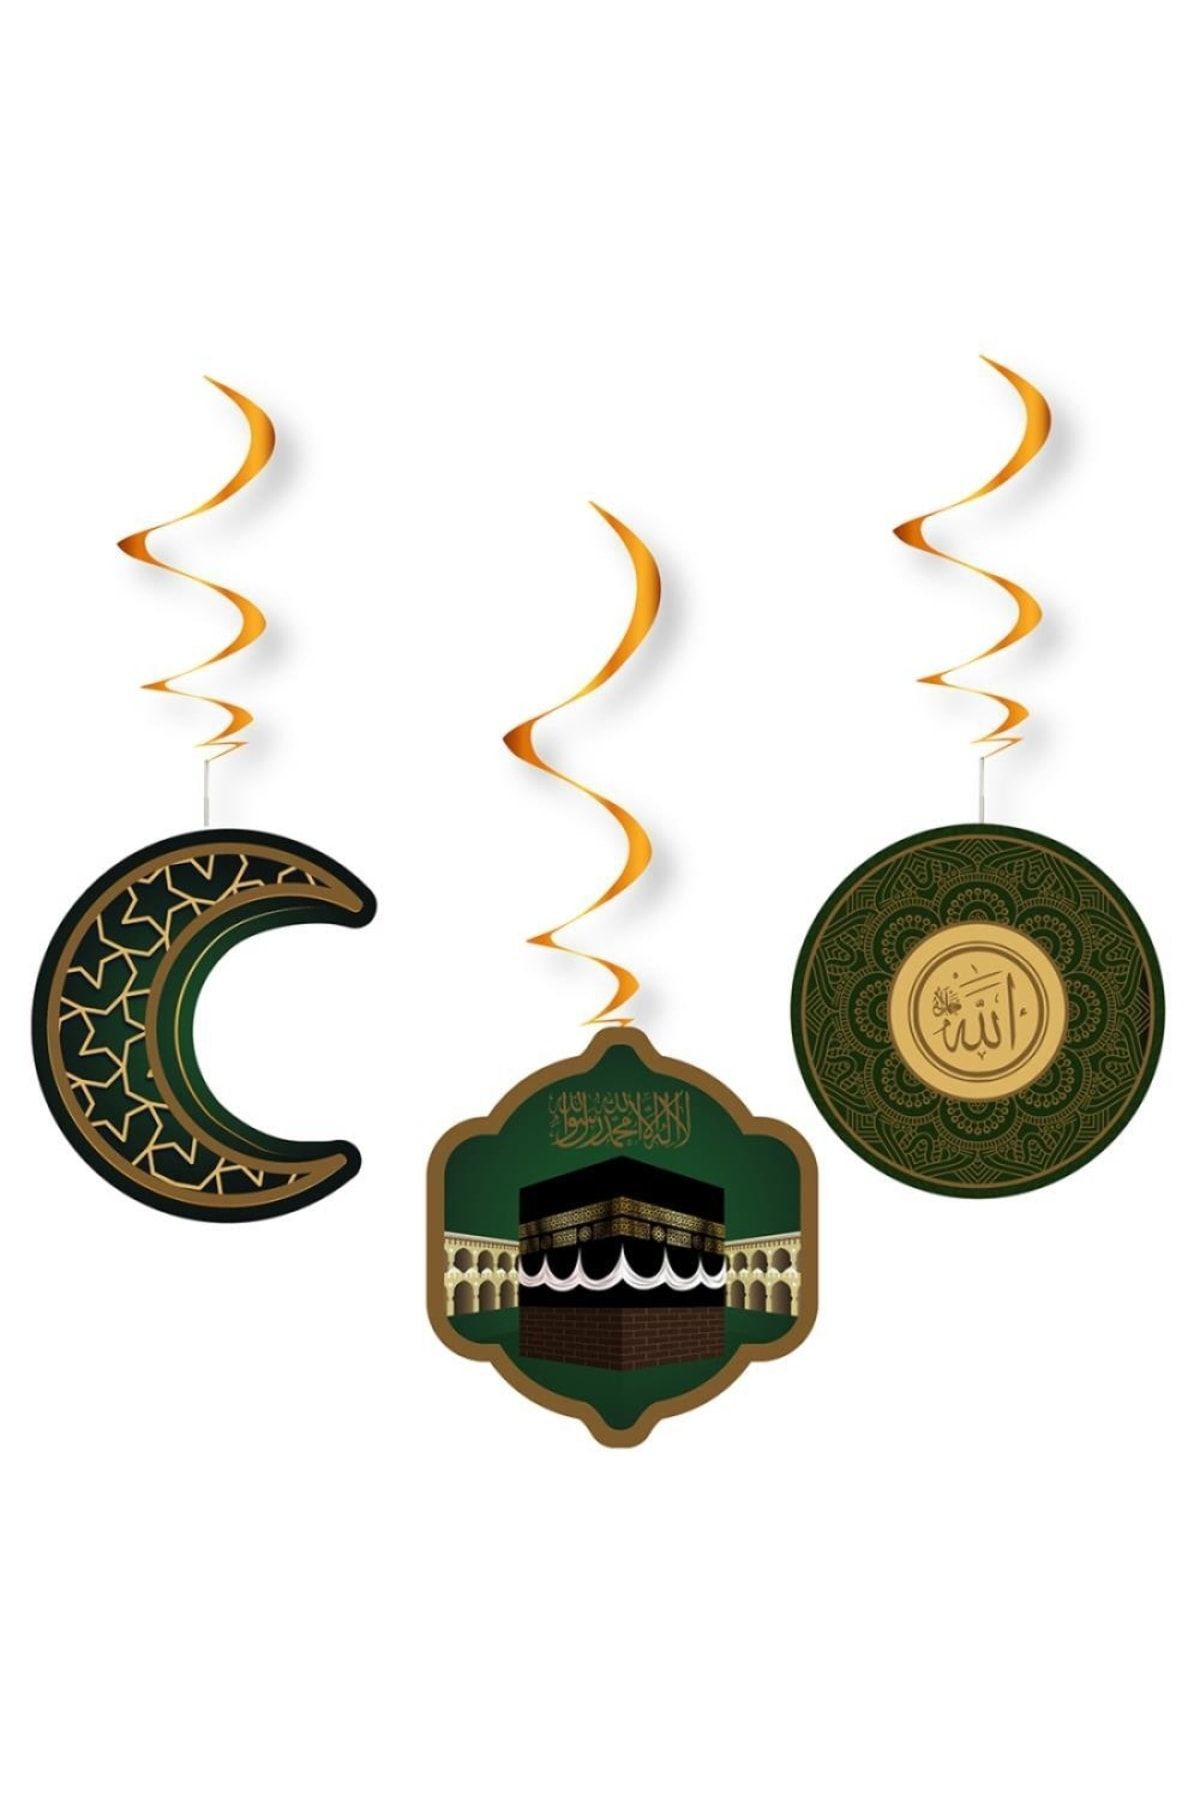 Mashotrend Ramazan Bayramı Afiş - Ramazan Banner - Bayram Banner - Kaligrafi Hoş Geldin Ramazan Banner